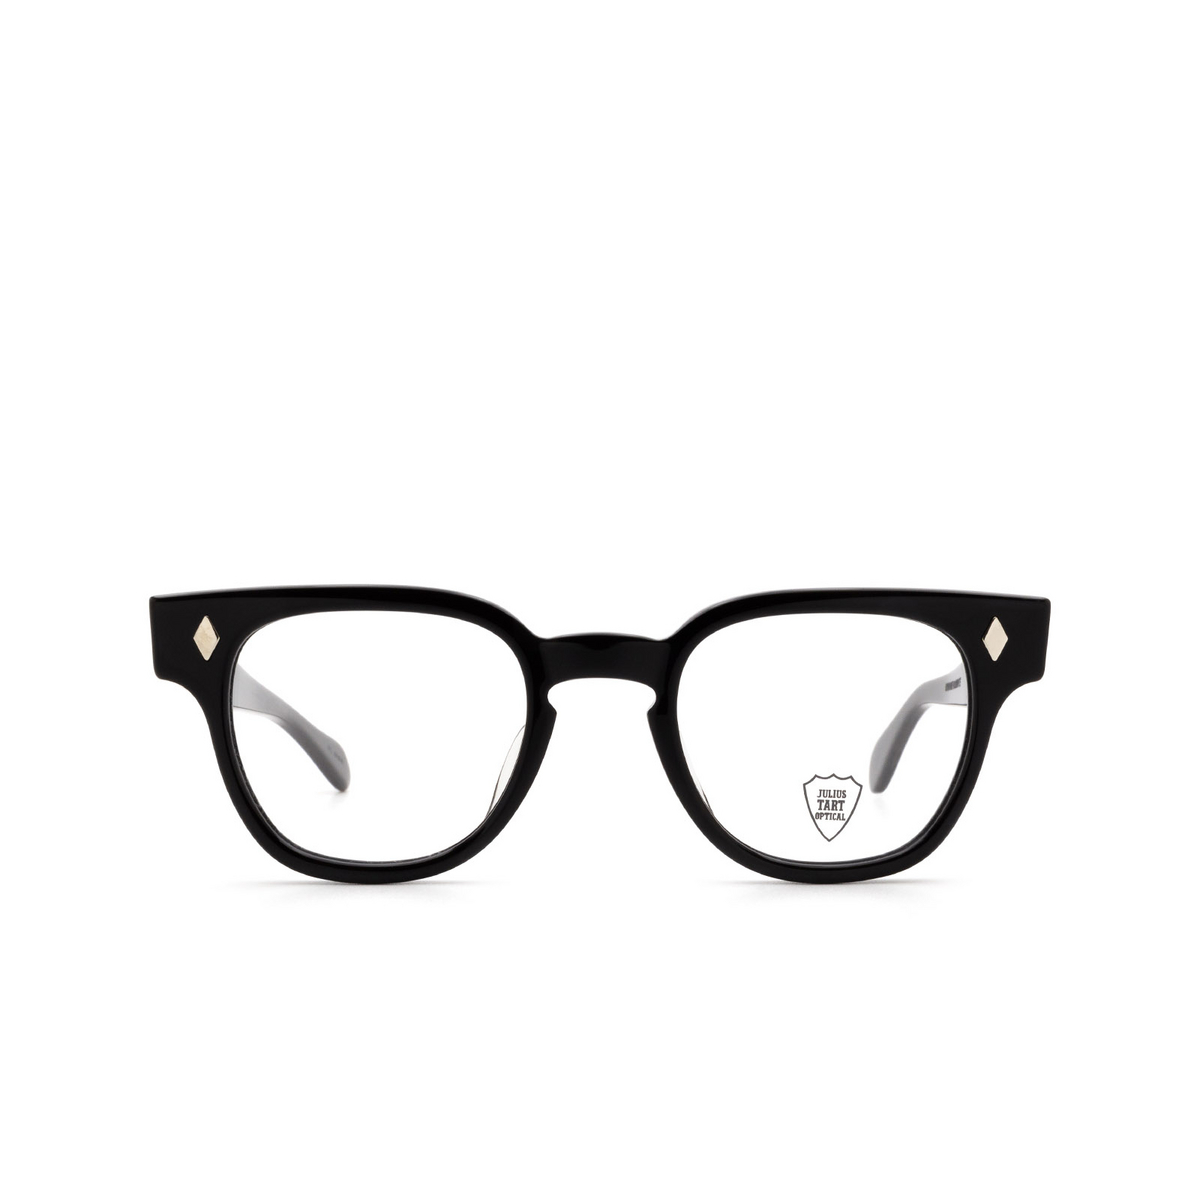 Julius Tart Optical® Square Eyeglasses: Bryan color Black - front view.